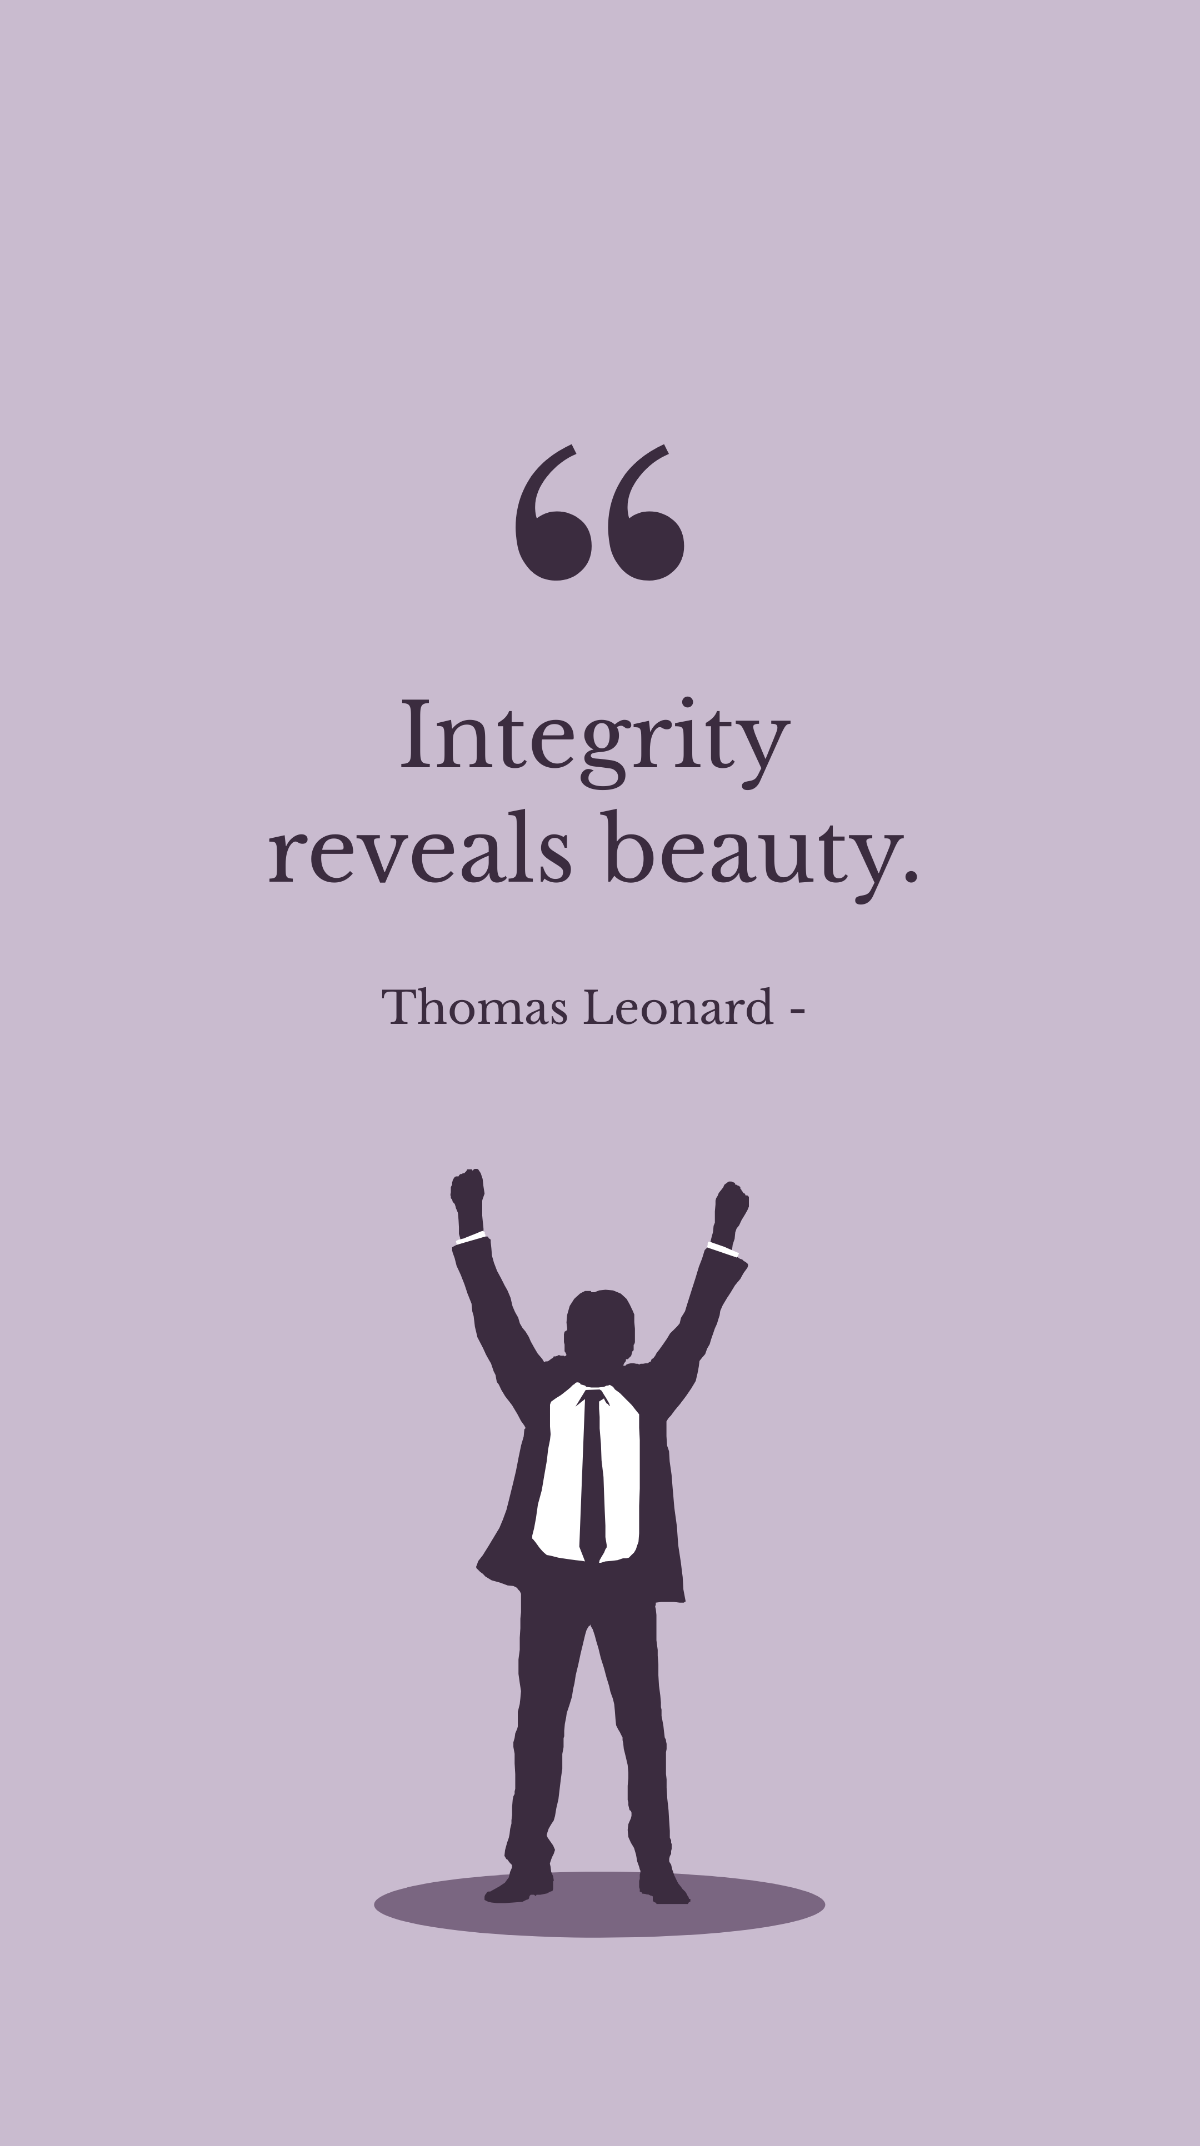 Free Thomas Leonard - Integrity reveals beauty. Template